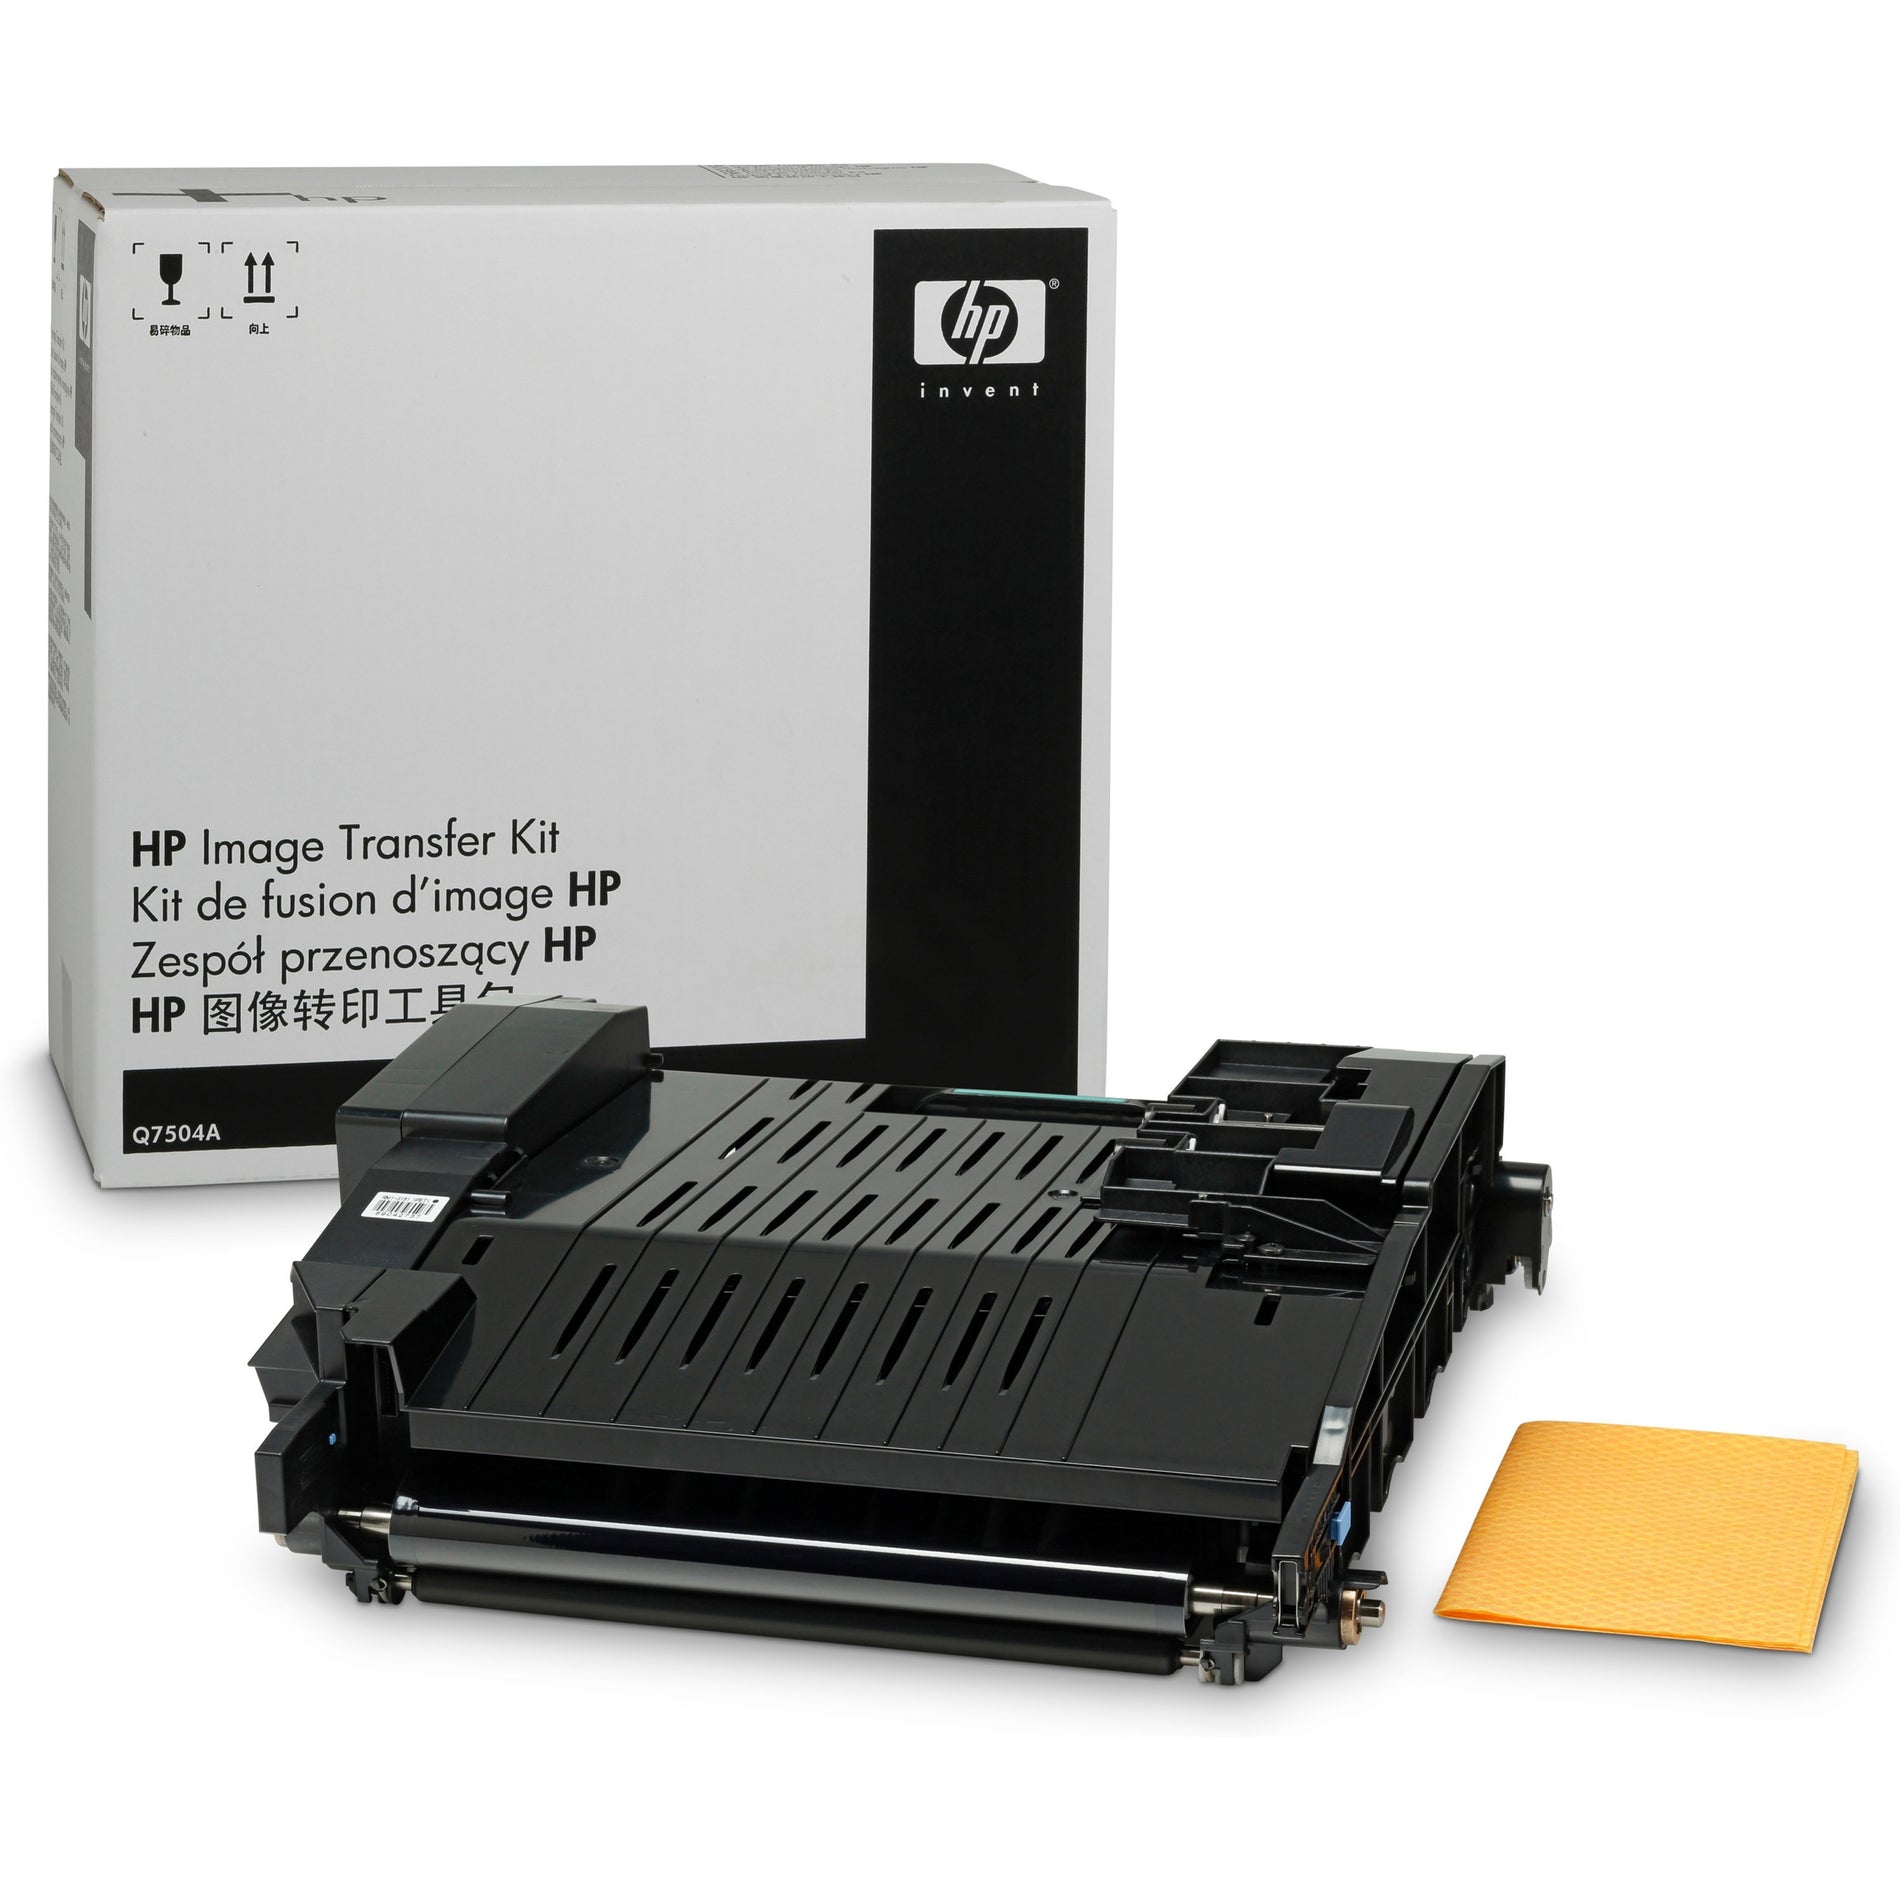 HP Q7504A Laser Transfer Kit, for LaserJet 4700 Series